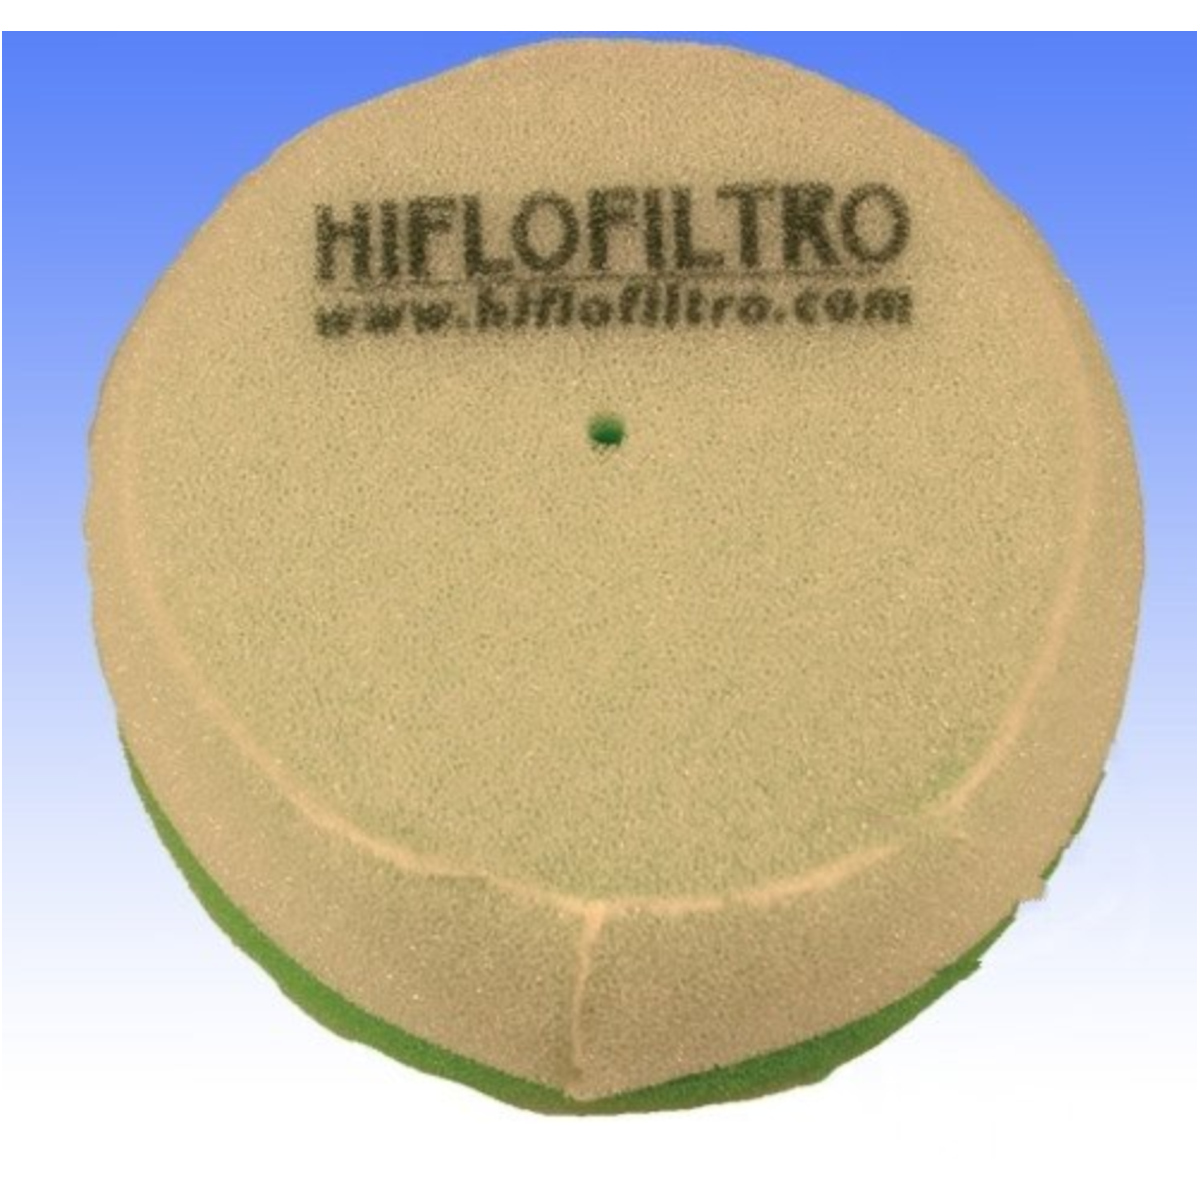 Hiflo hff2018 luftfilter foam hiflo von HIFLO